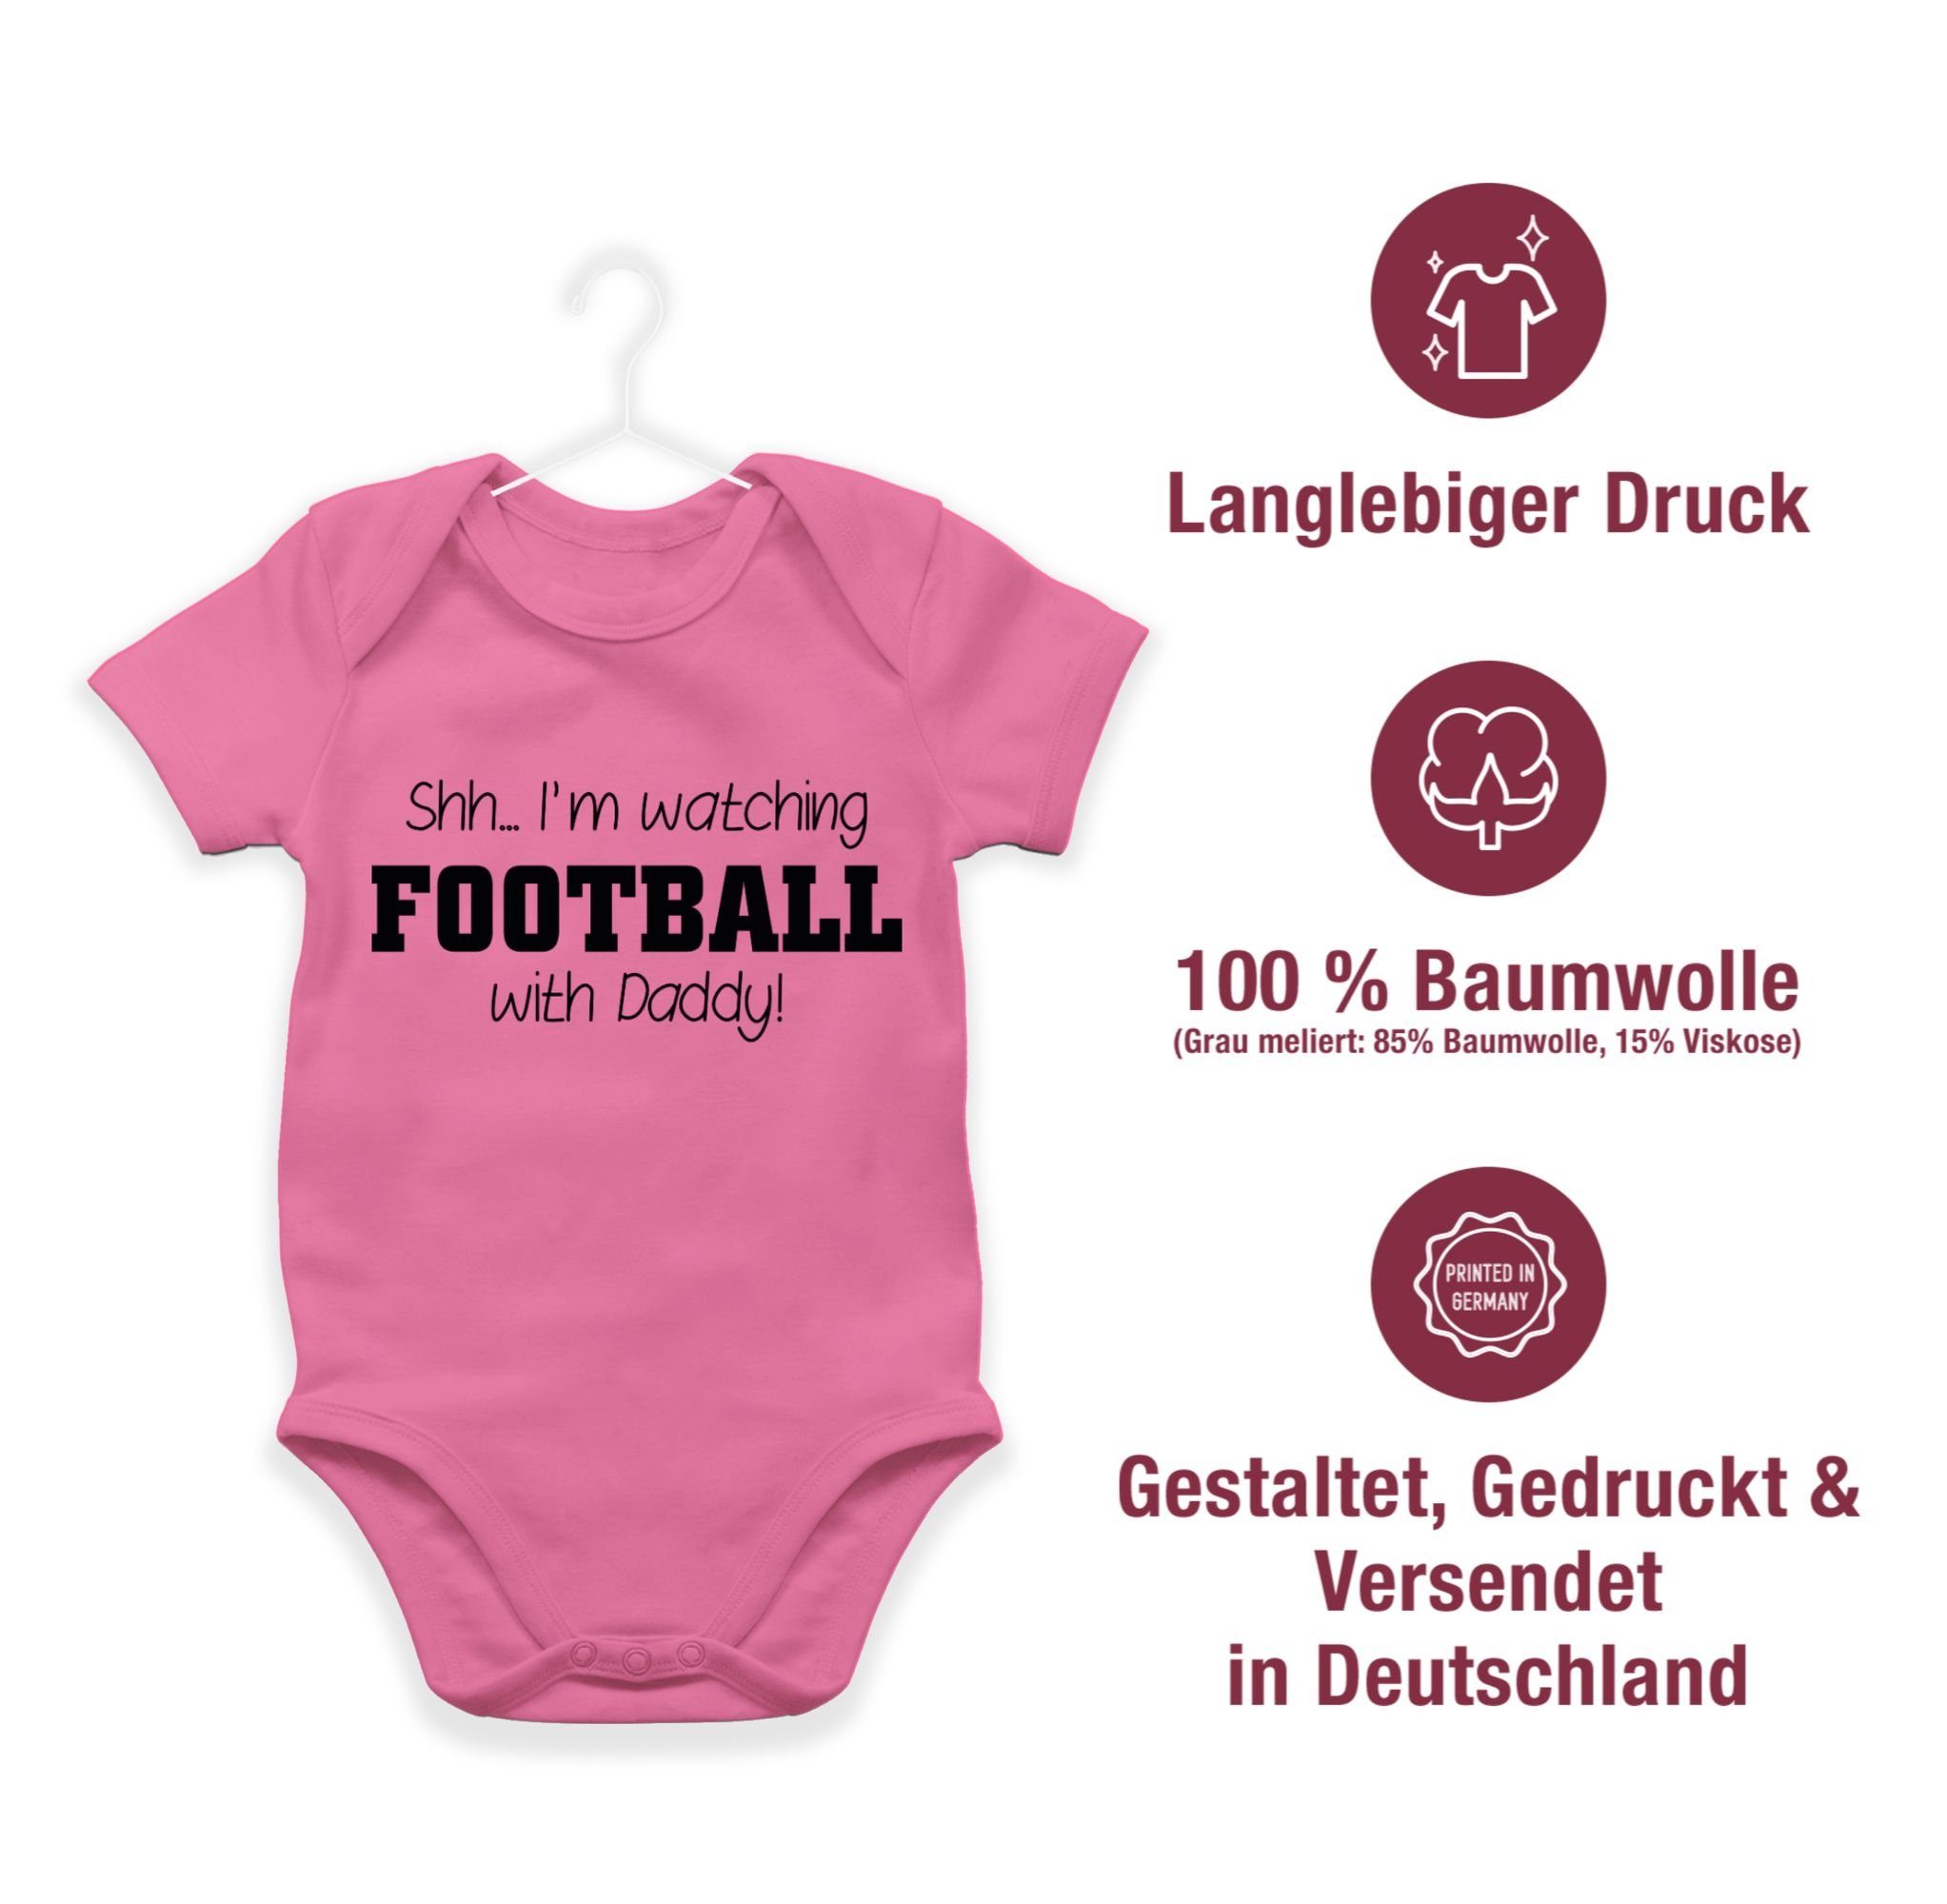 Daddy! watching Baby football Shirtracer with 2 Shh...I'm - schwarz Sport & Bewegung Pink Shirtbody